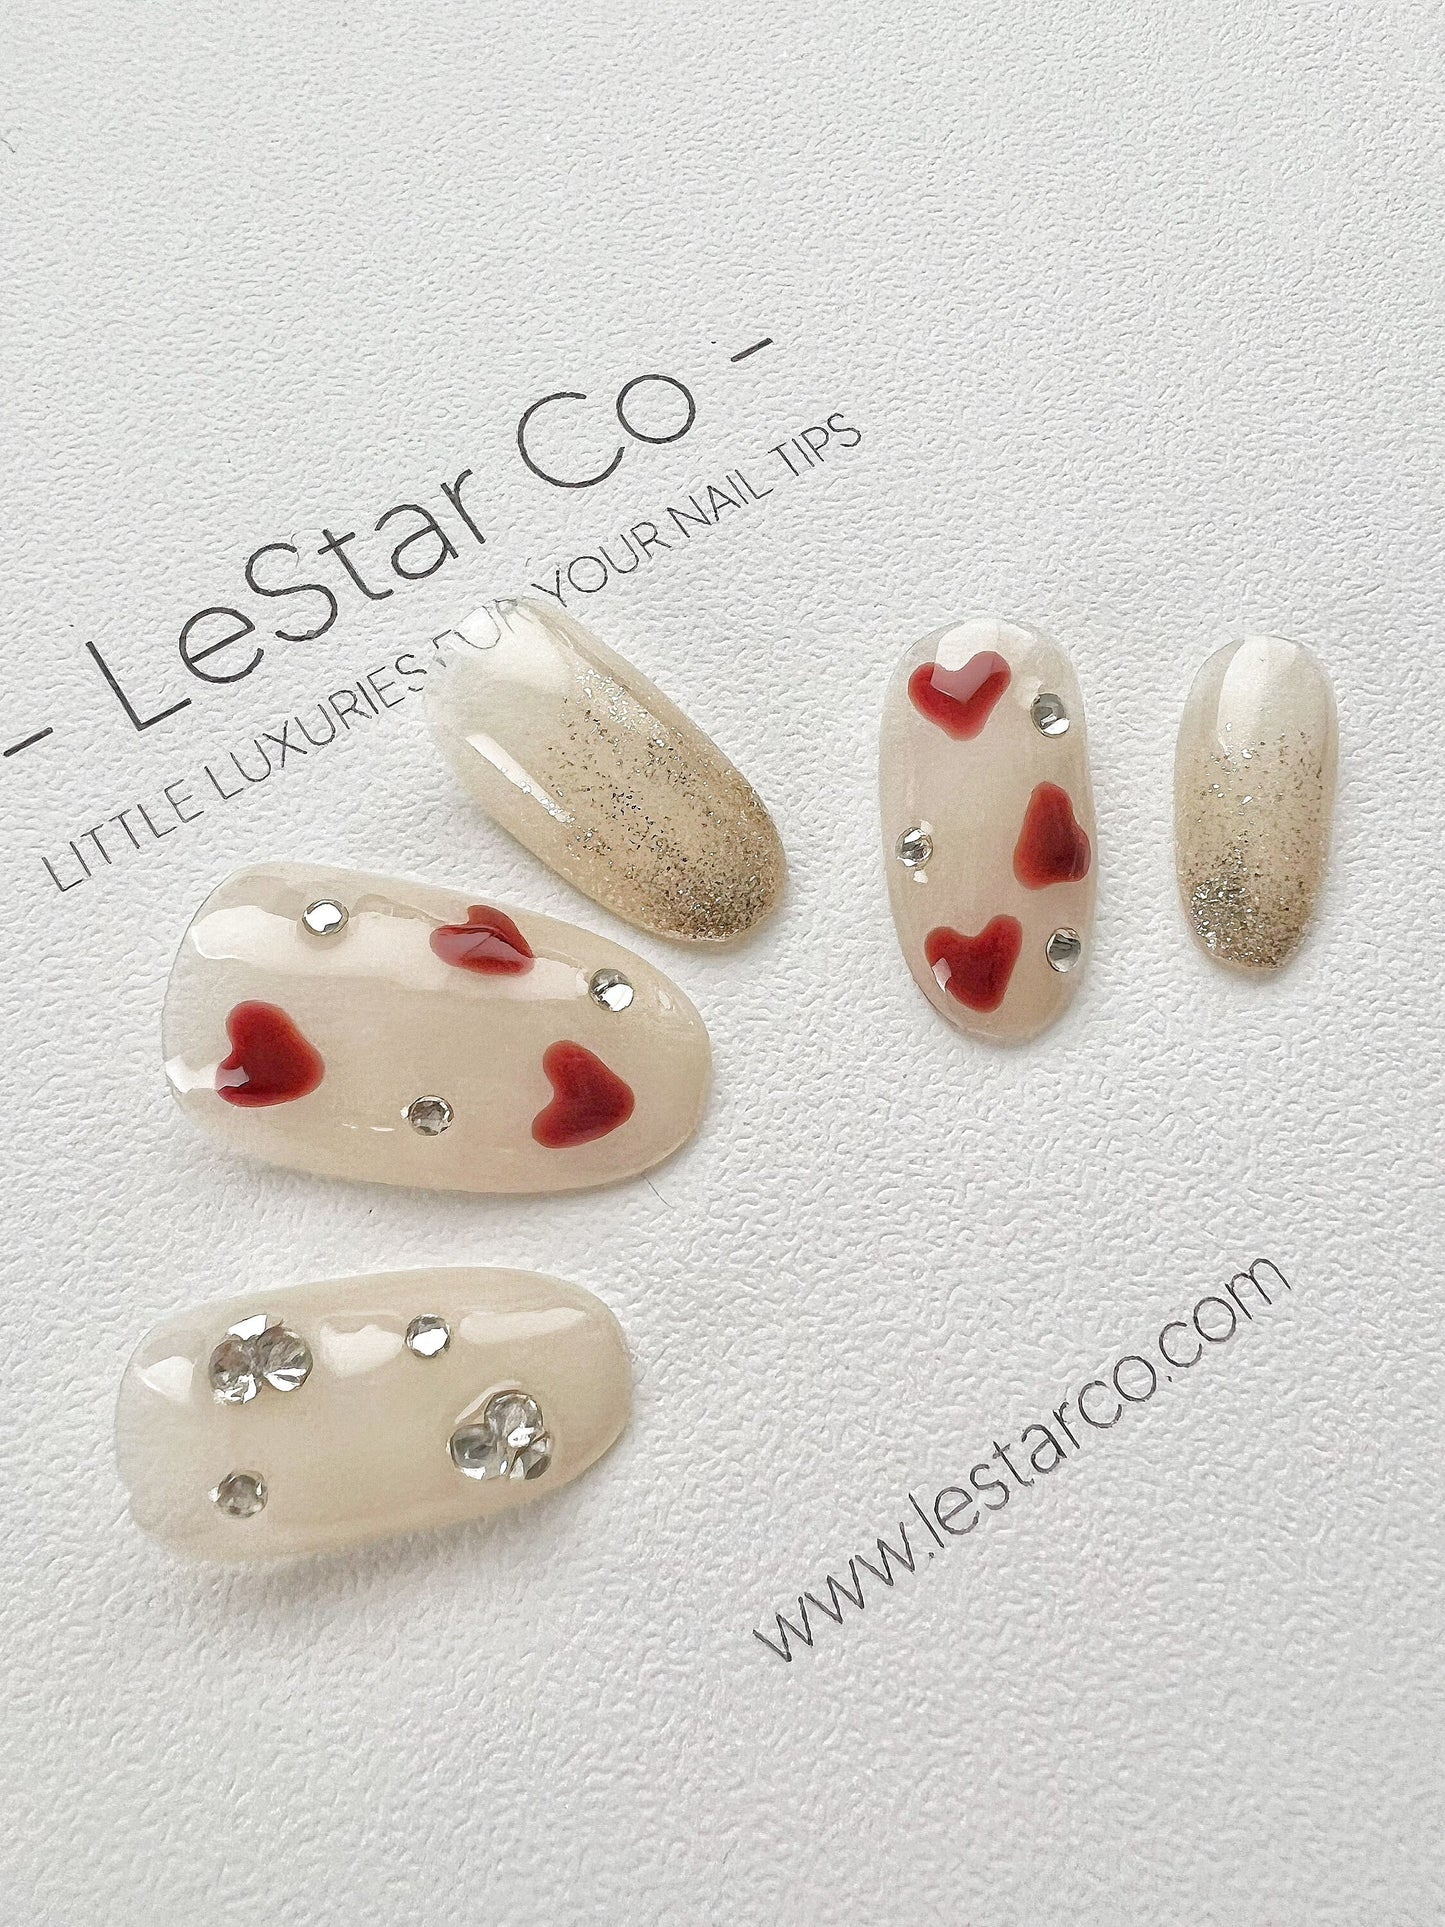 Reusable Love Story Nails Premium Short Press on Nails Gel Manicure | Fake Nails | Handmade | Lestarco faux nails XX223